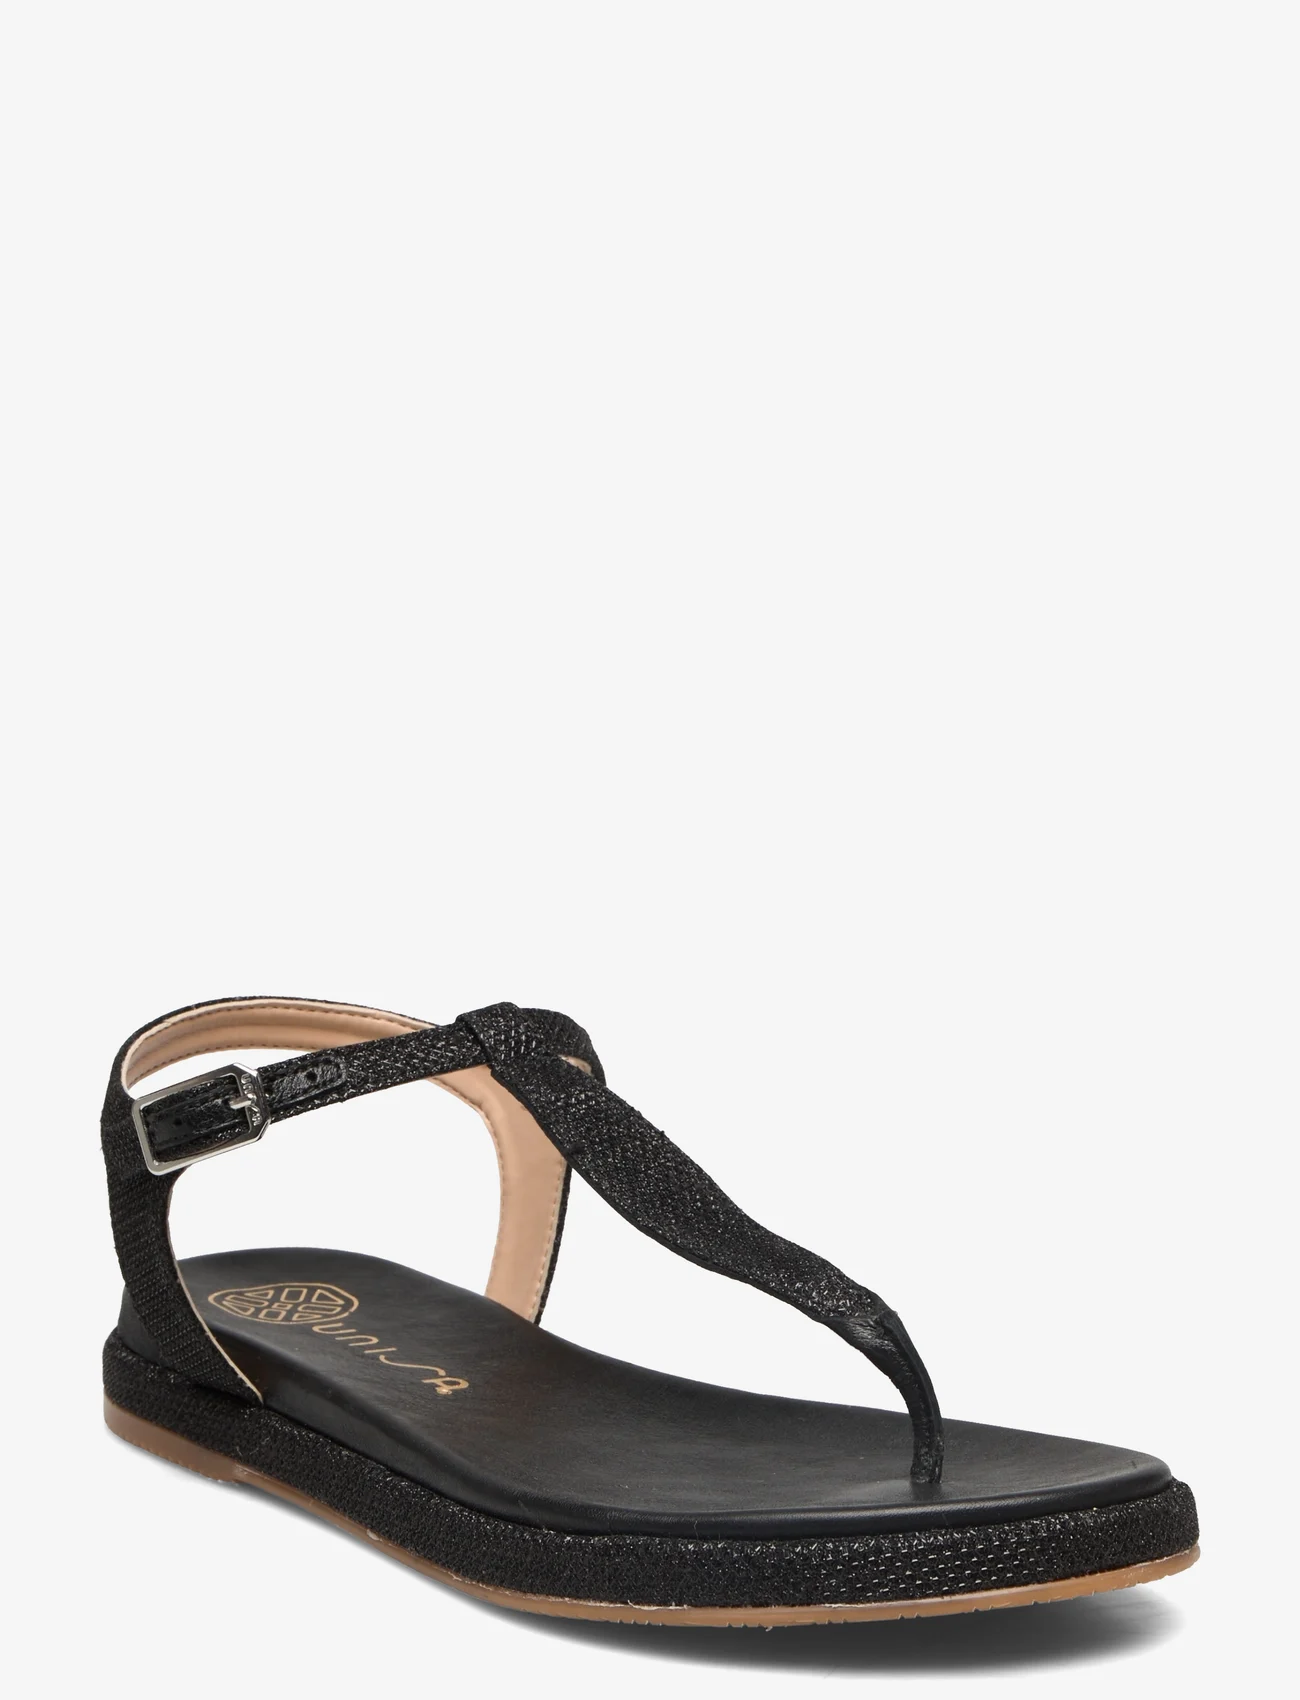 UNISA - CHARLOT_EV - flat sandals - black - 0